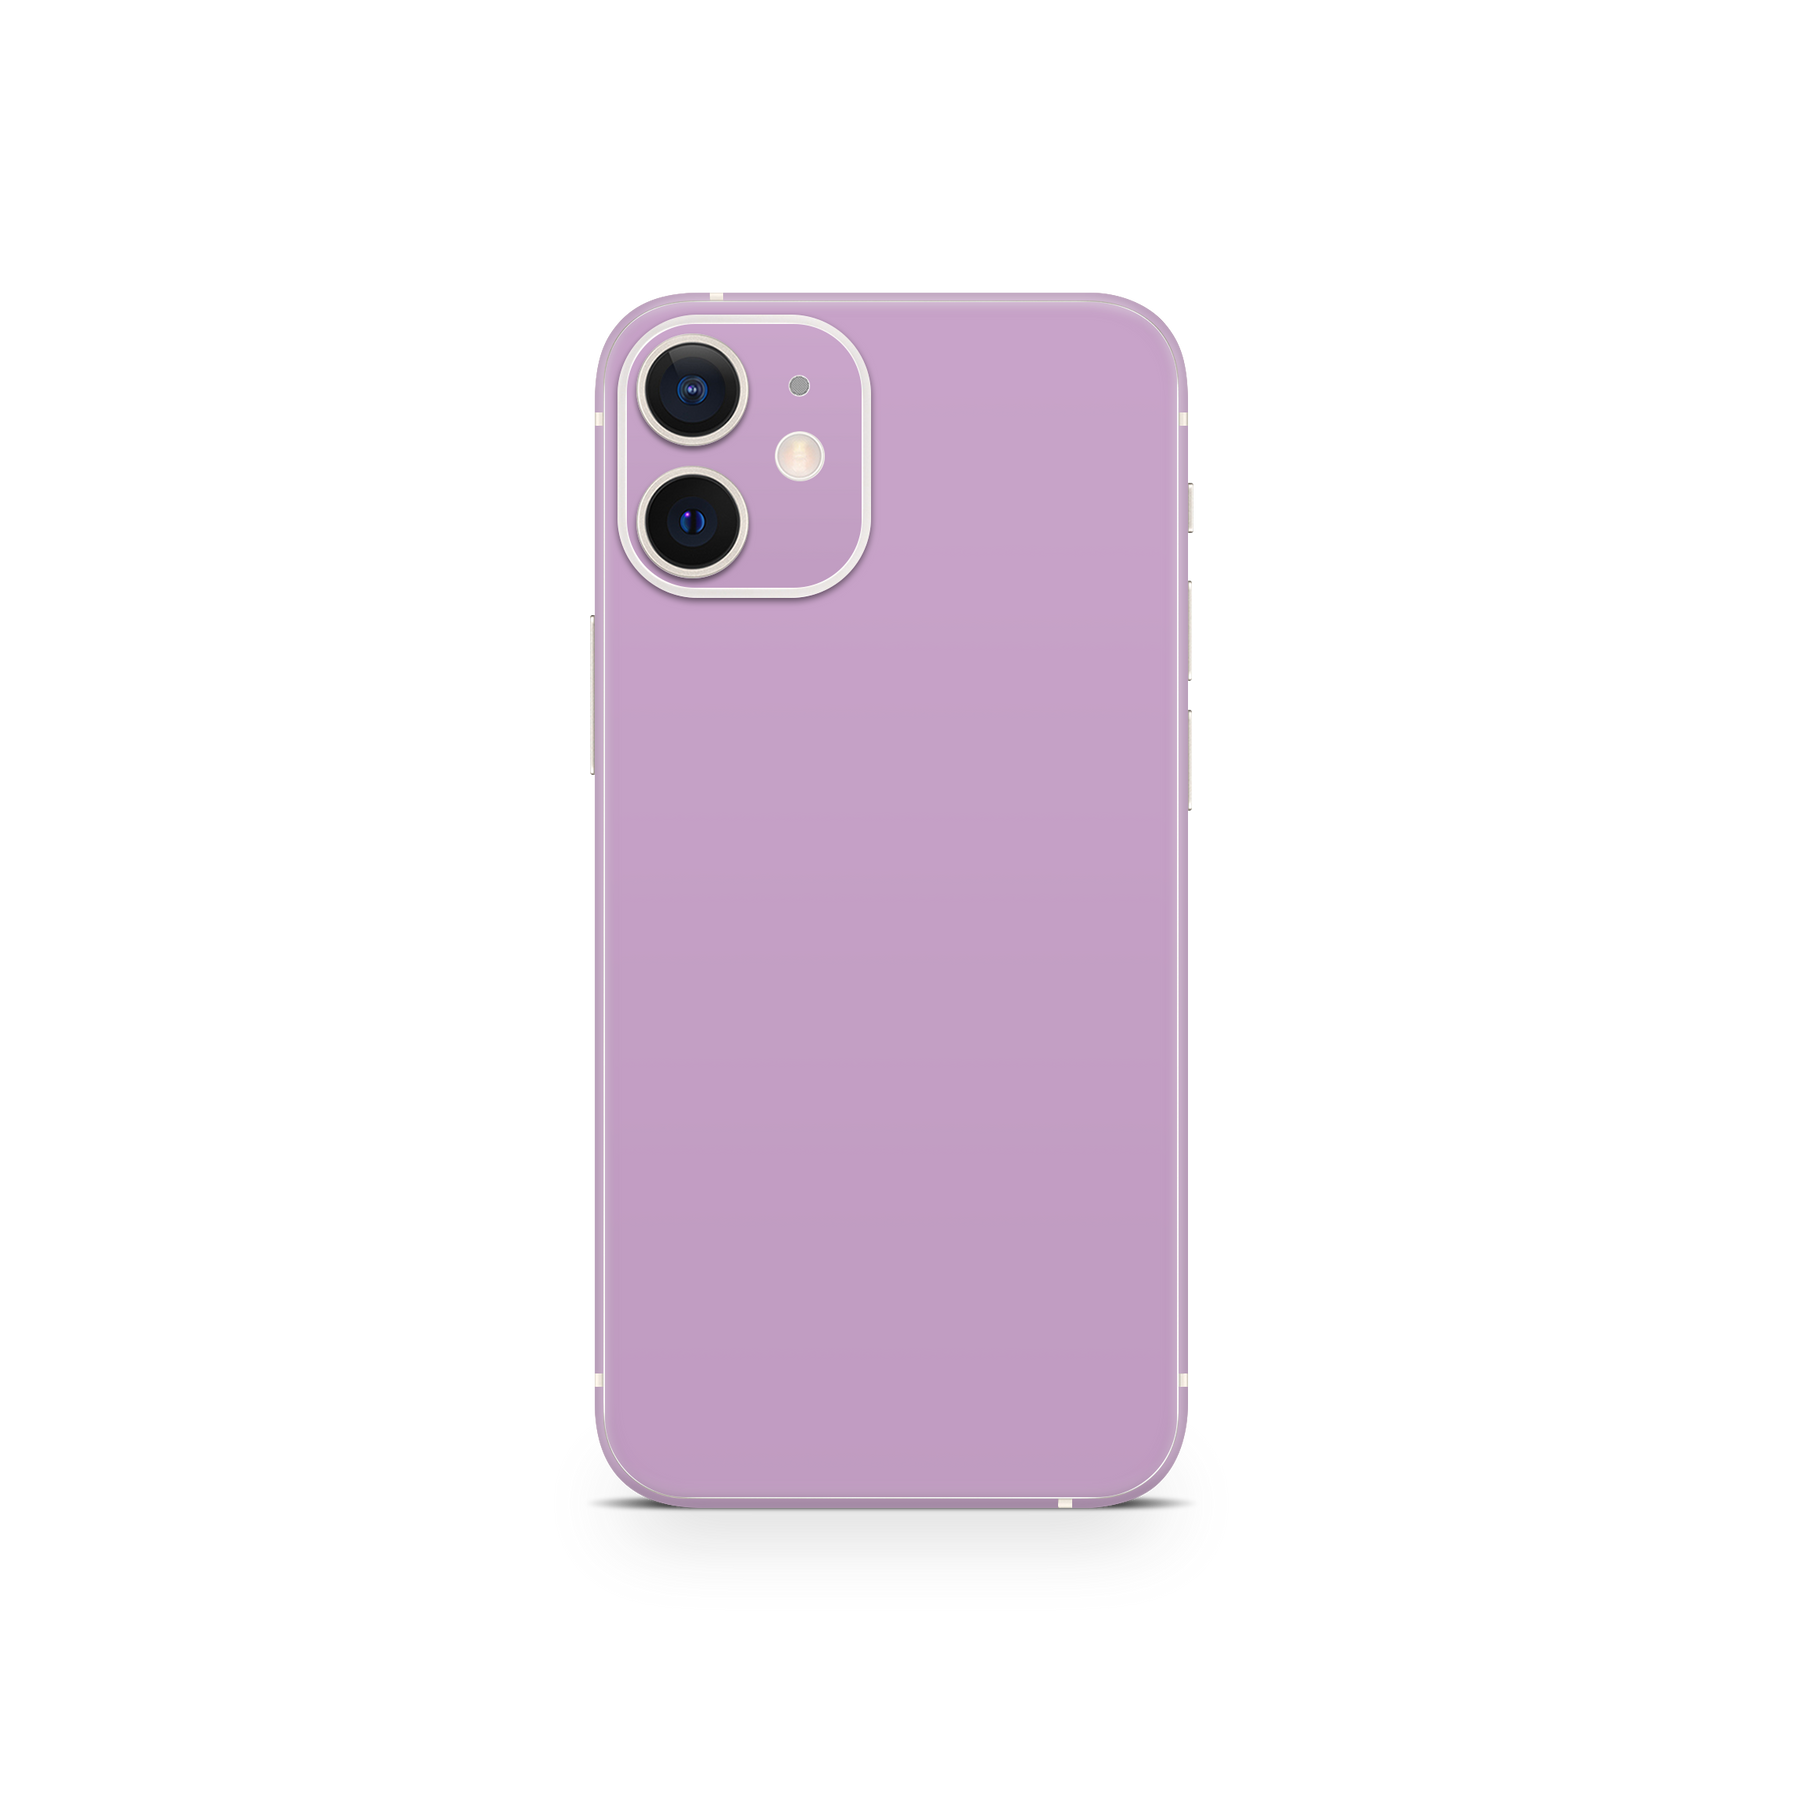 Apple iPhone 12 Mini Soft Lilac Skin